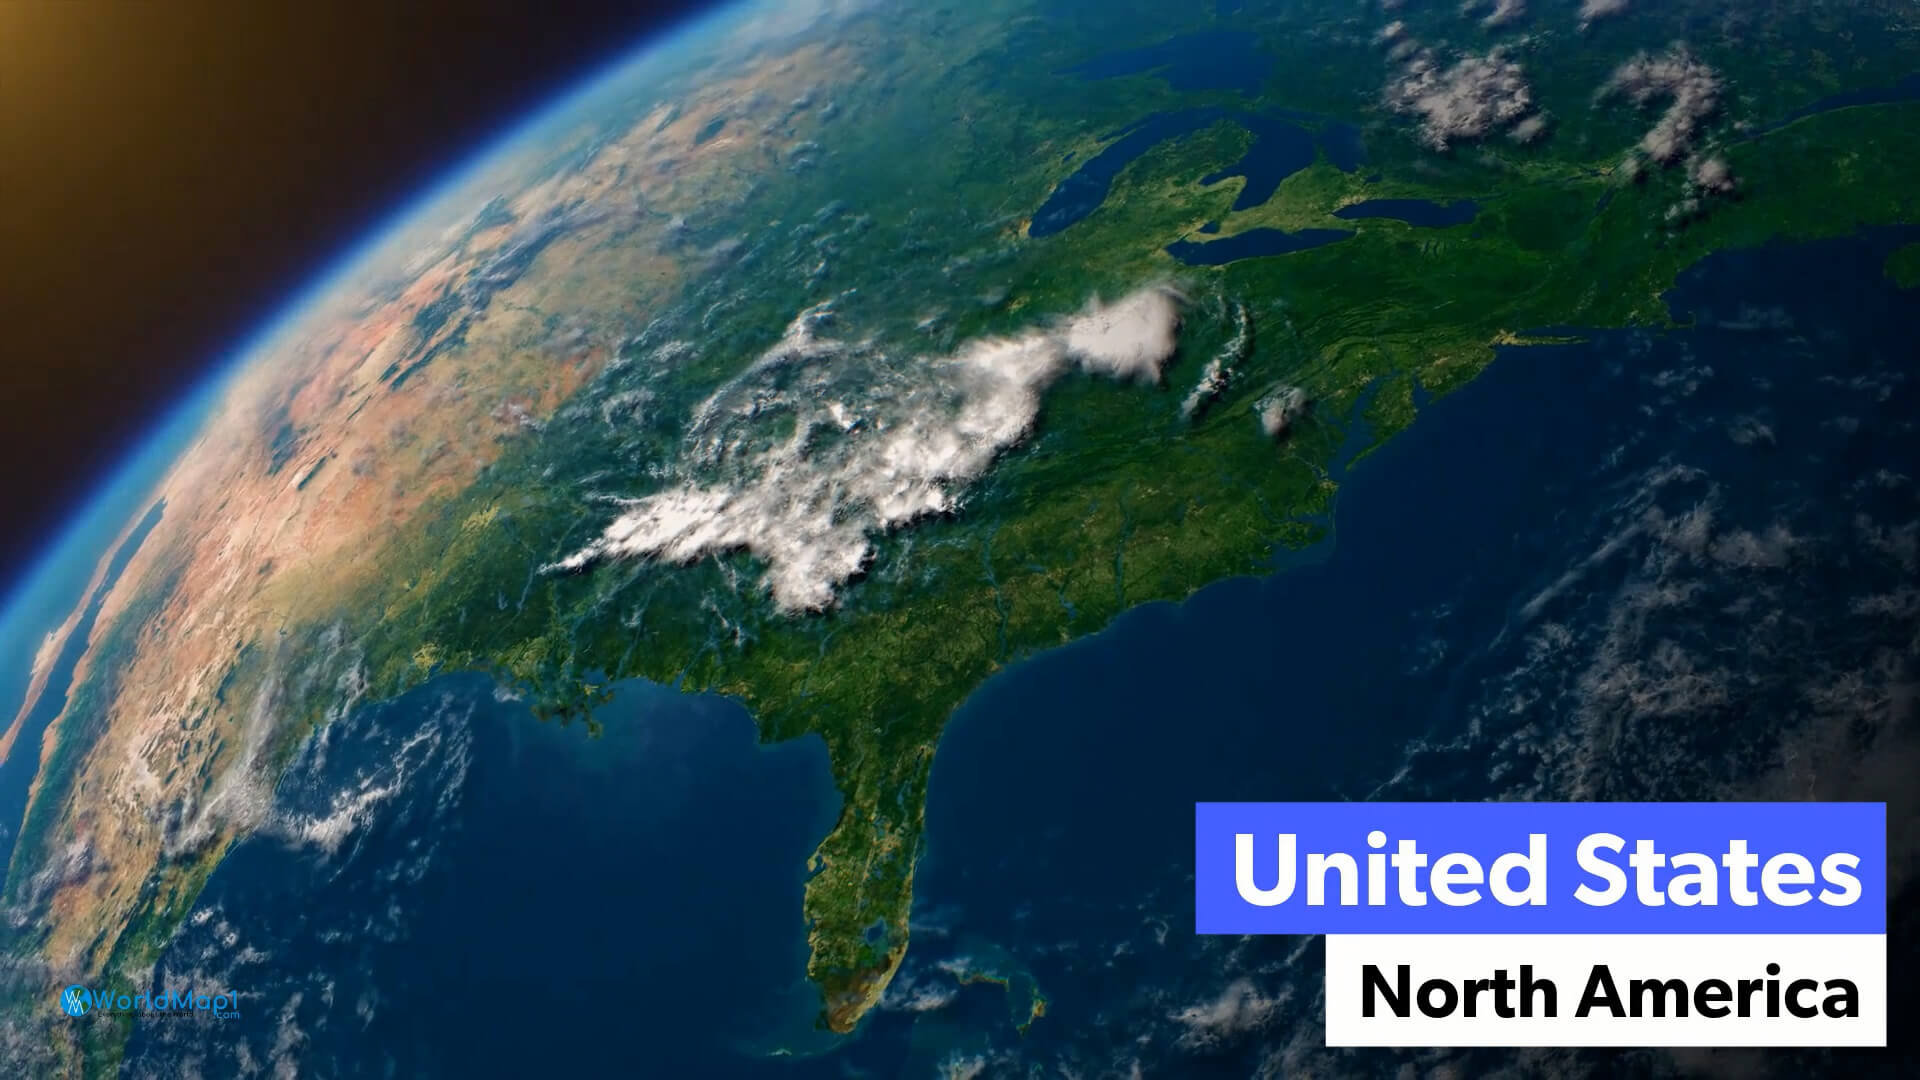 United States and North America Satellite View